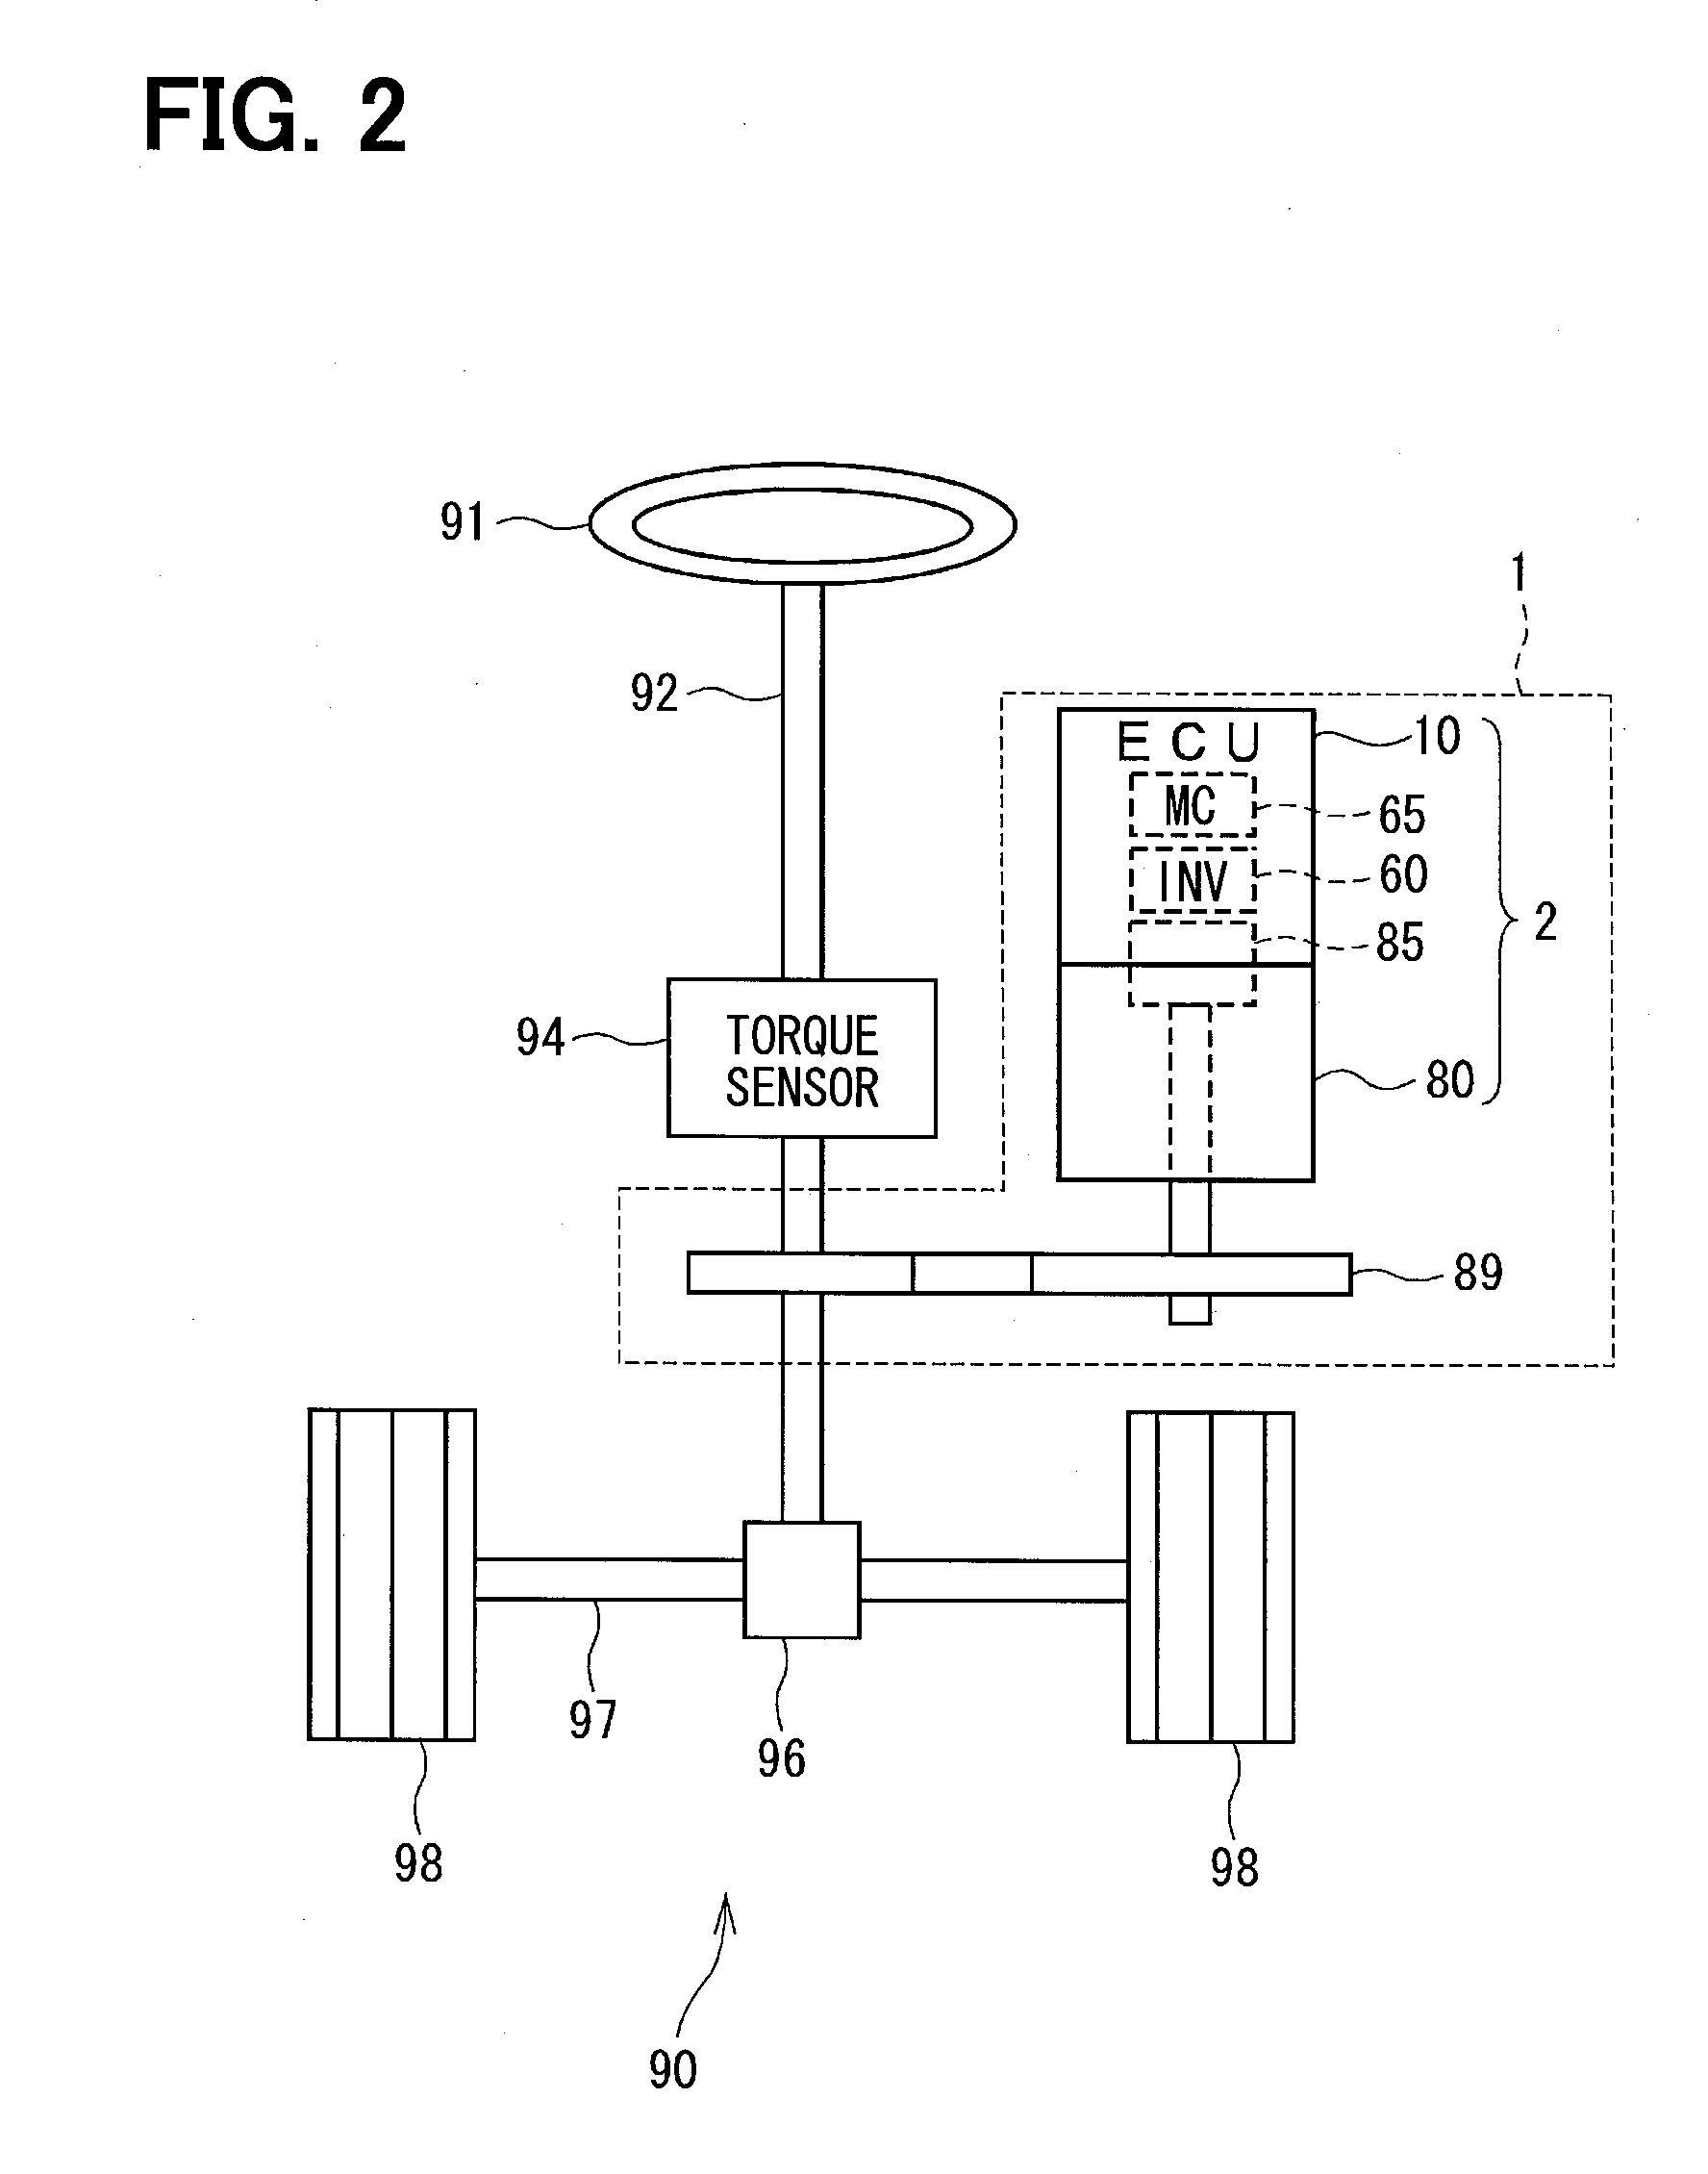 Three-phase rotary machine control apparatus